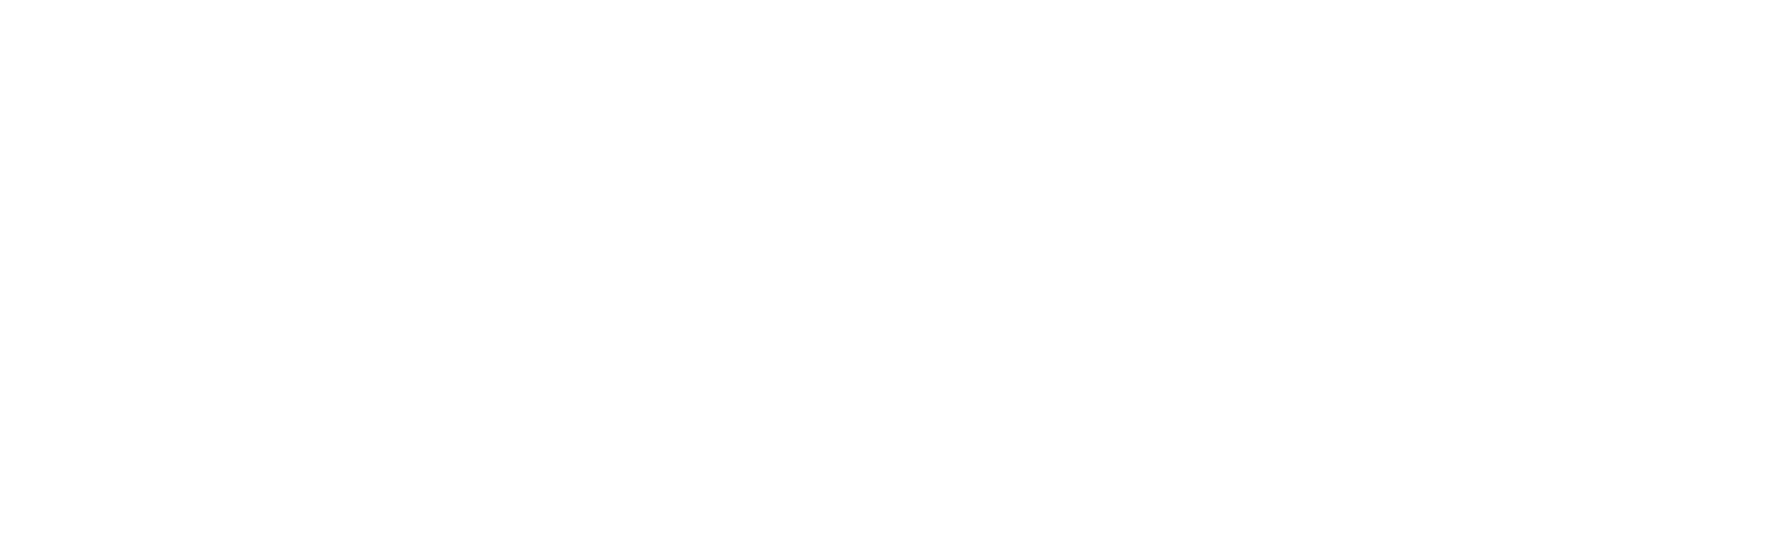 Humanity Health Center